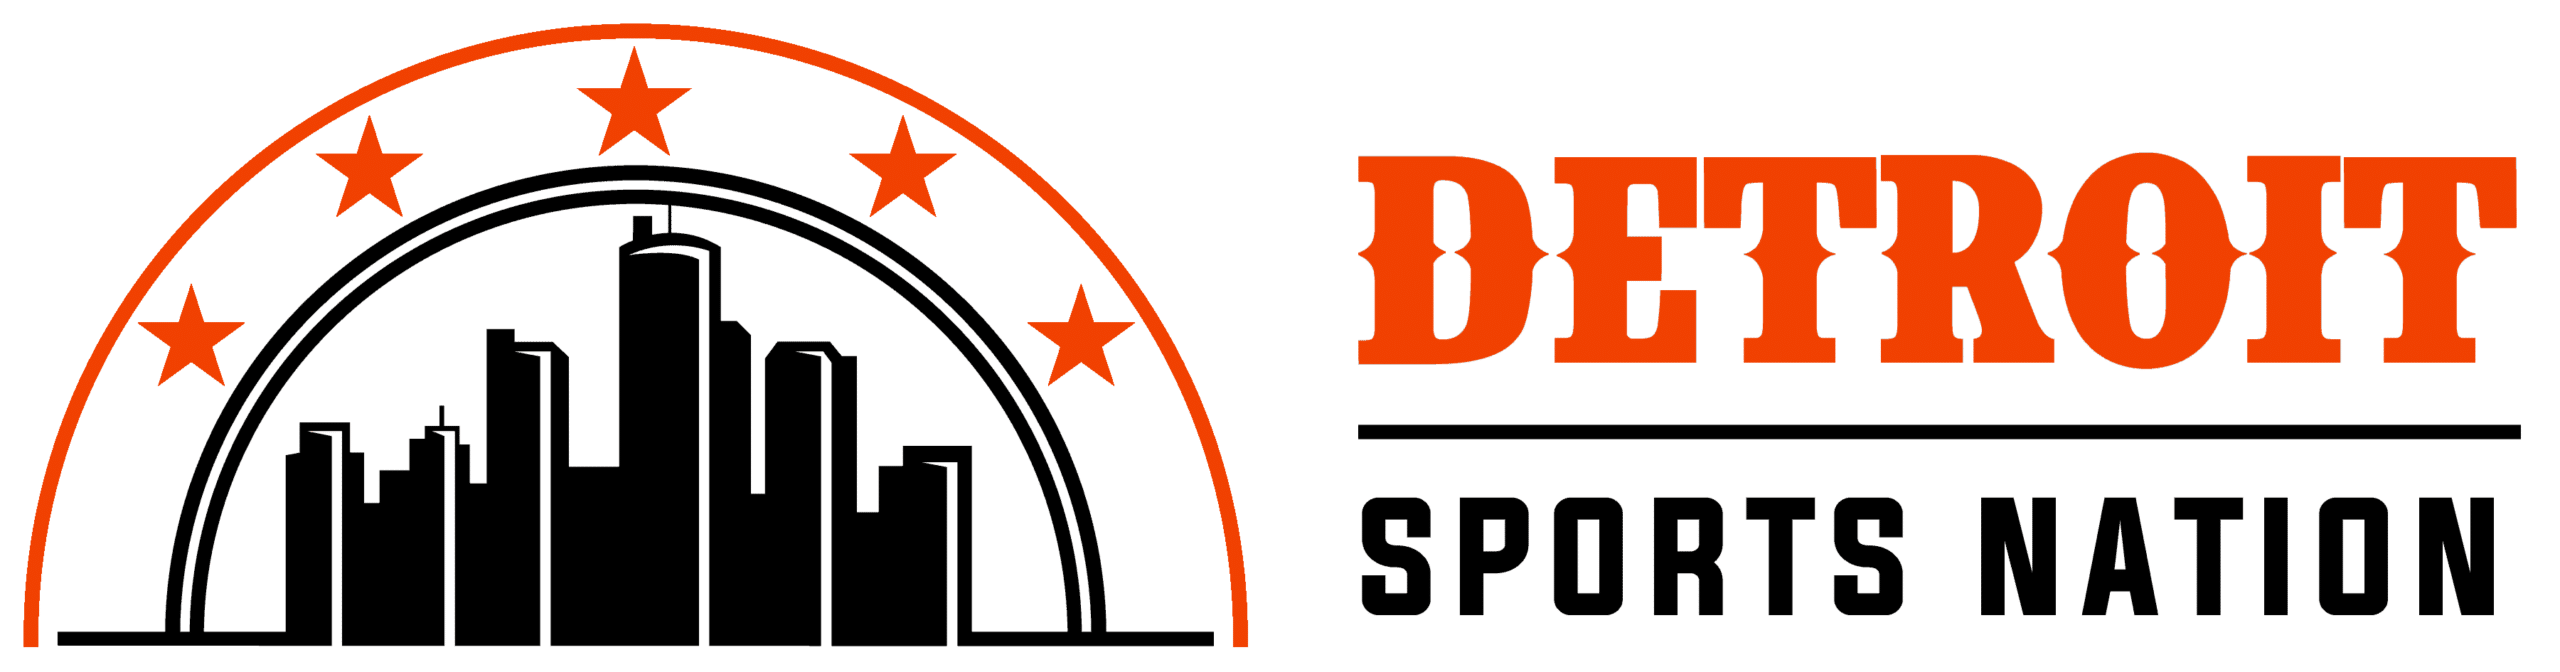 Detroit-Sports-Nation-MOBILE